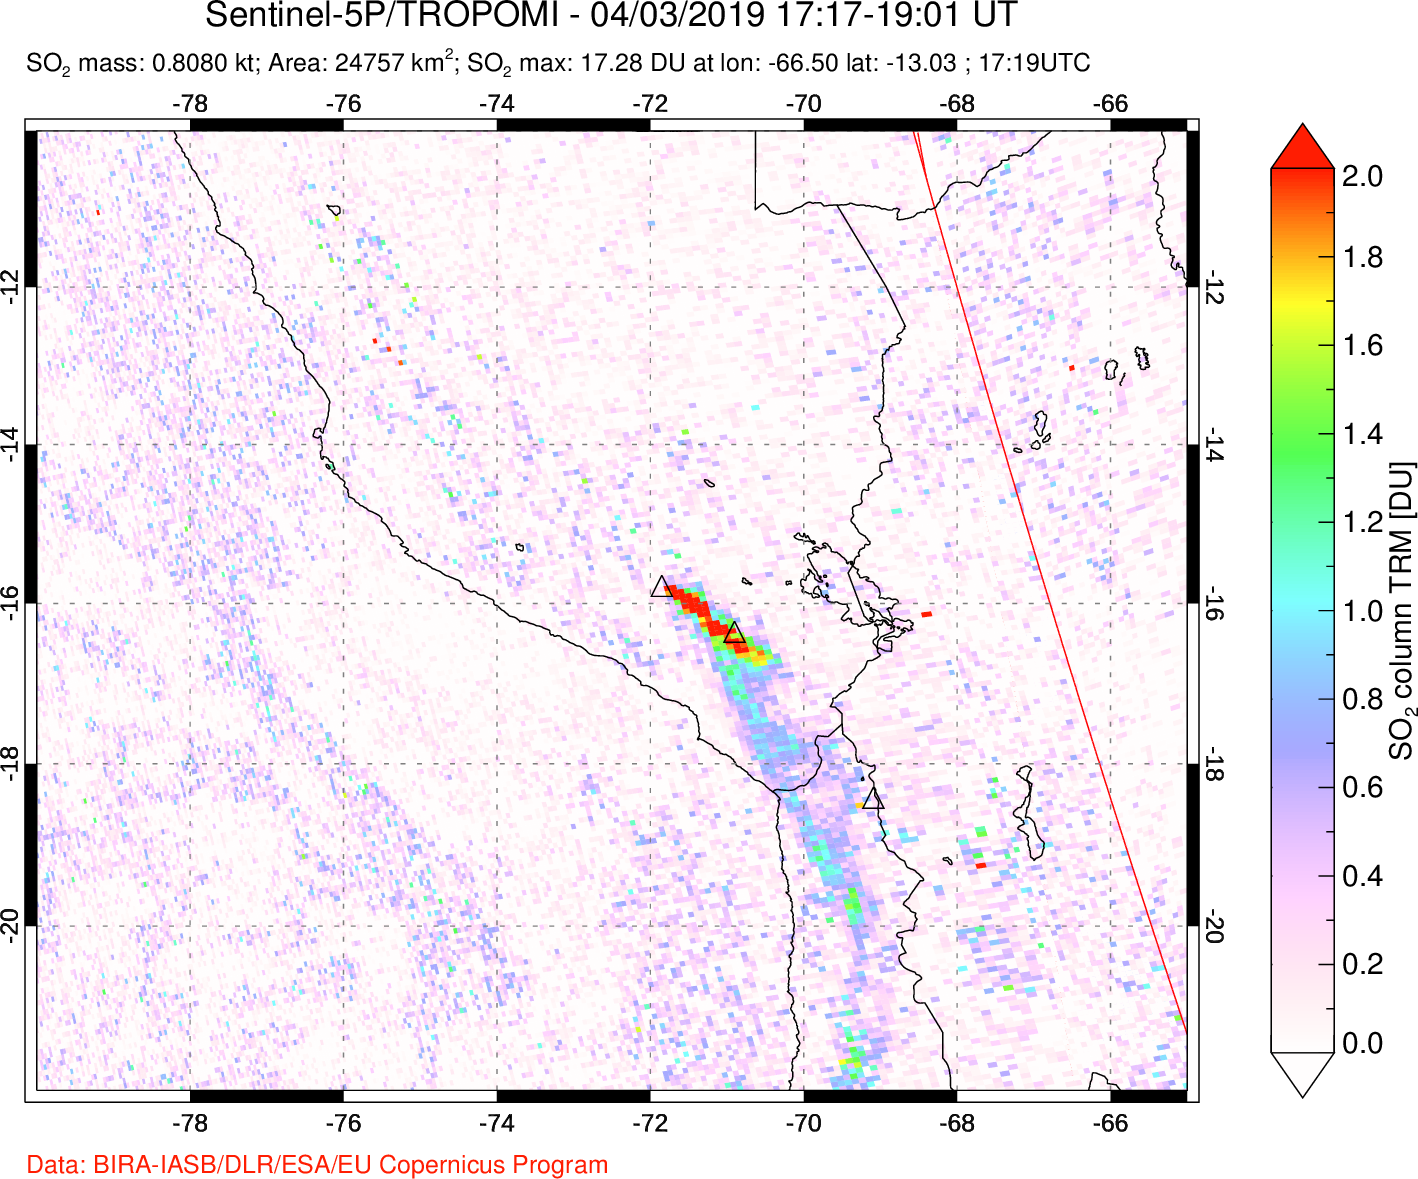 A sulfur dioxide image over Peru on Apr 03, 2019.